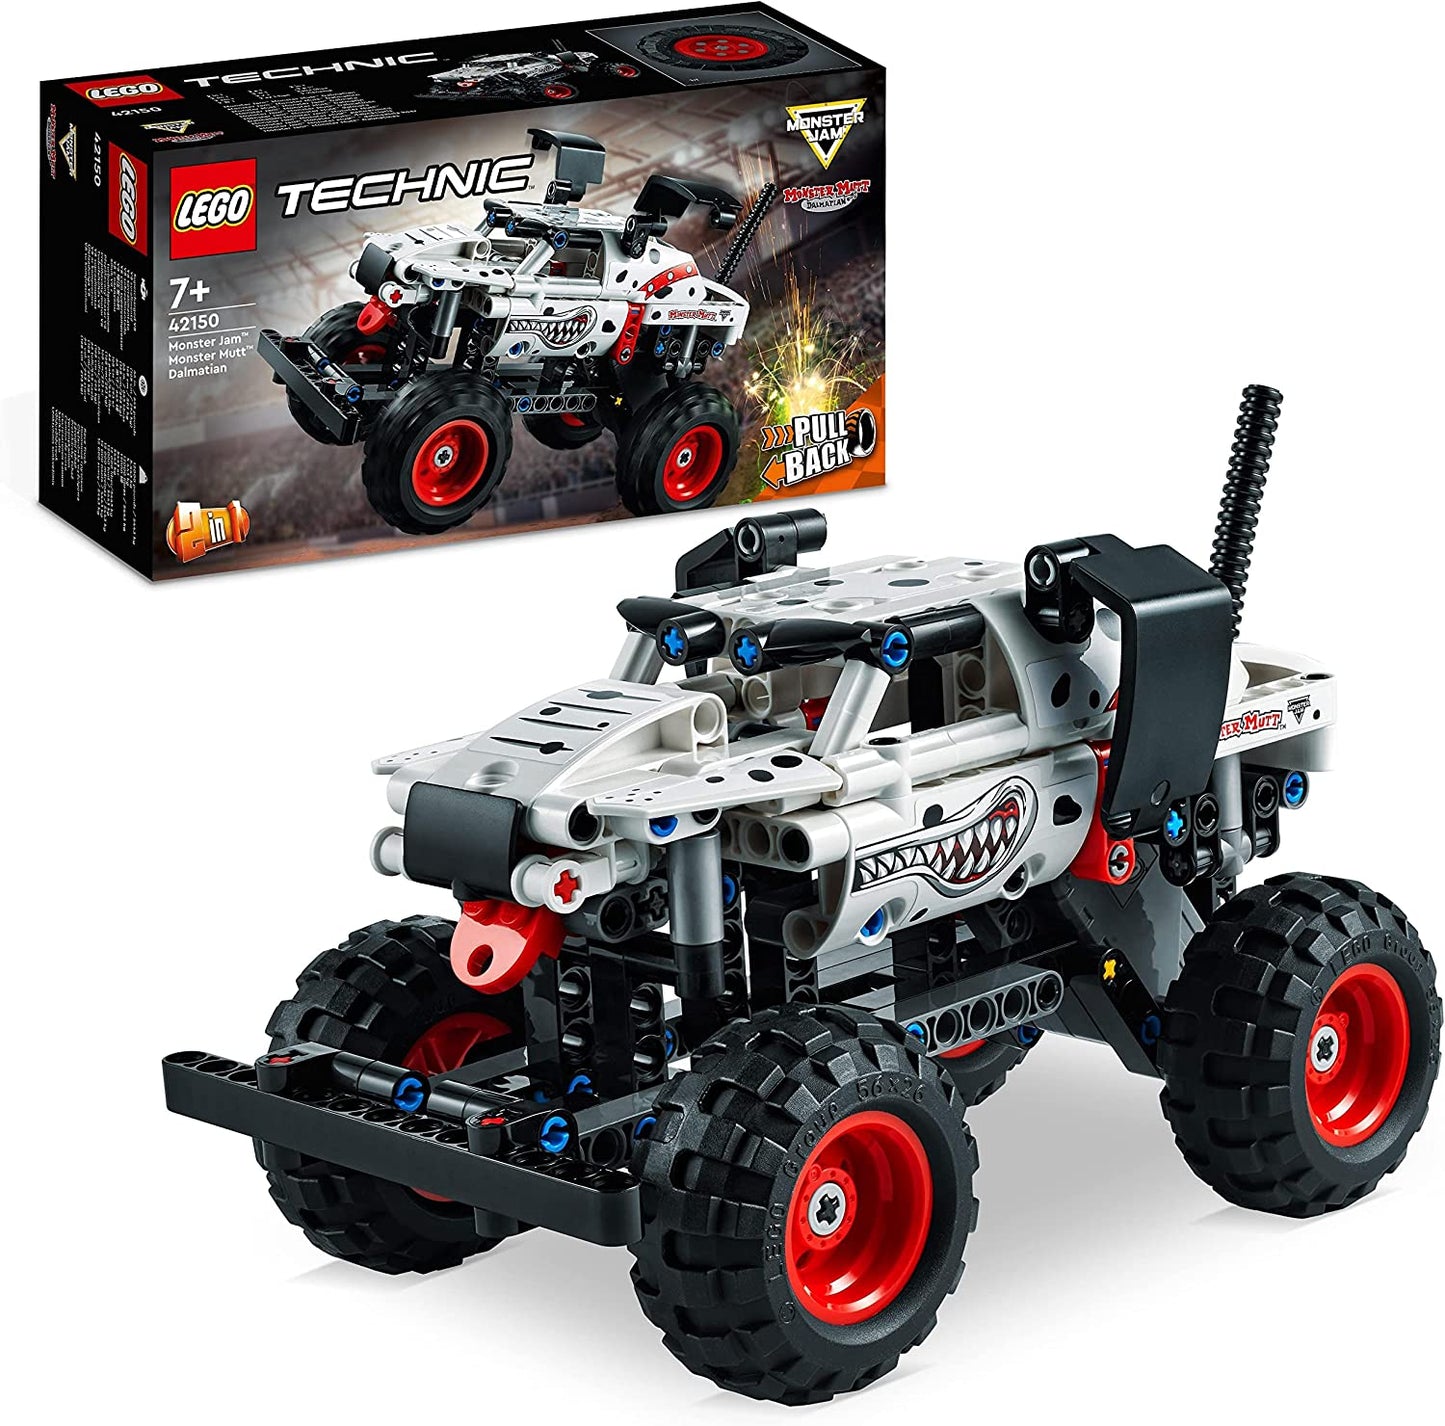 Lego Technic camion Monster Jam dalmatien